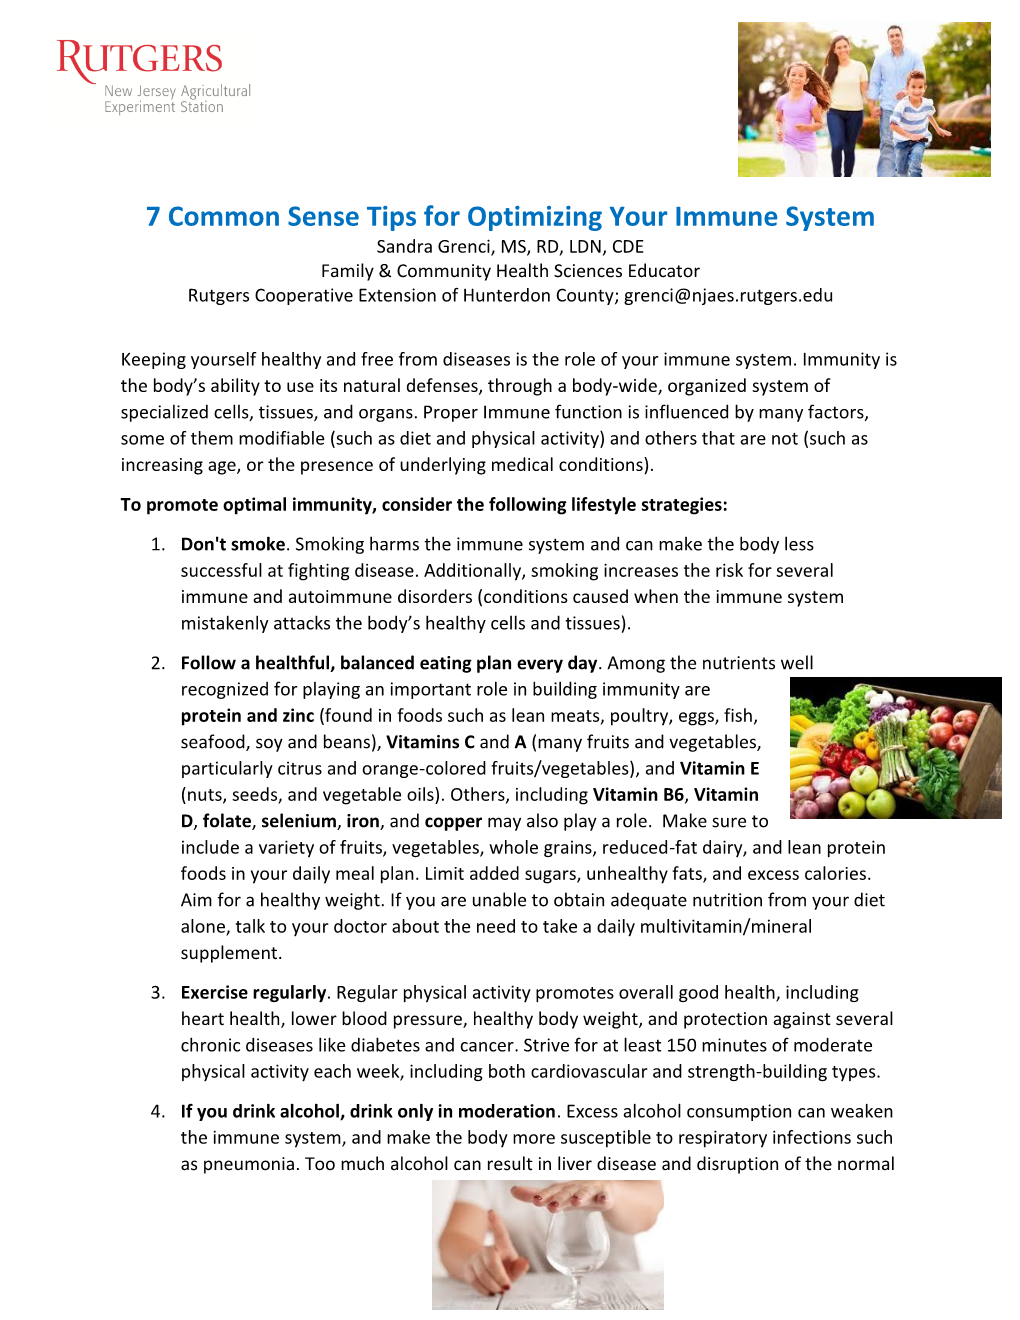 7 Common Sense Tips for Optimizing Your Immune System (PDF)